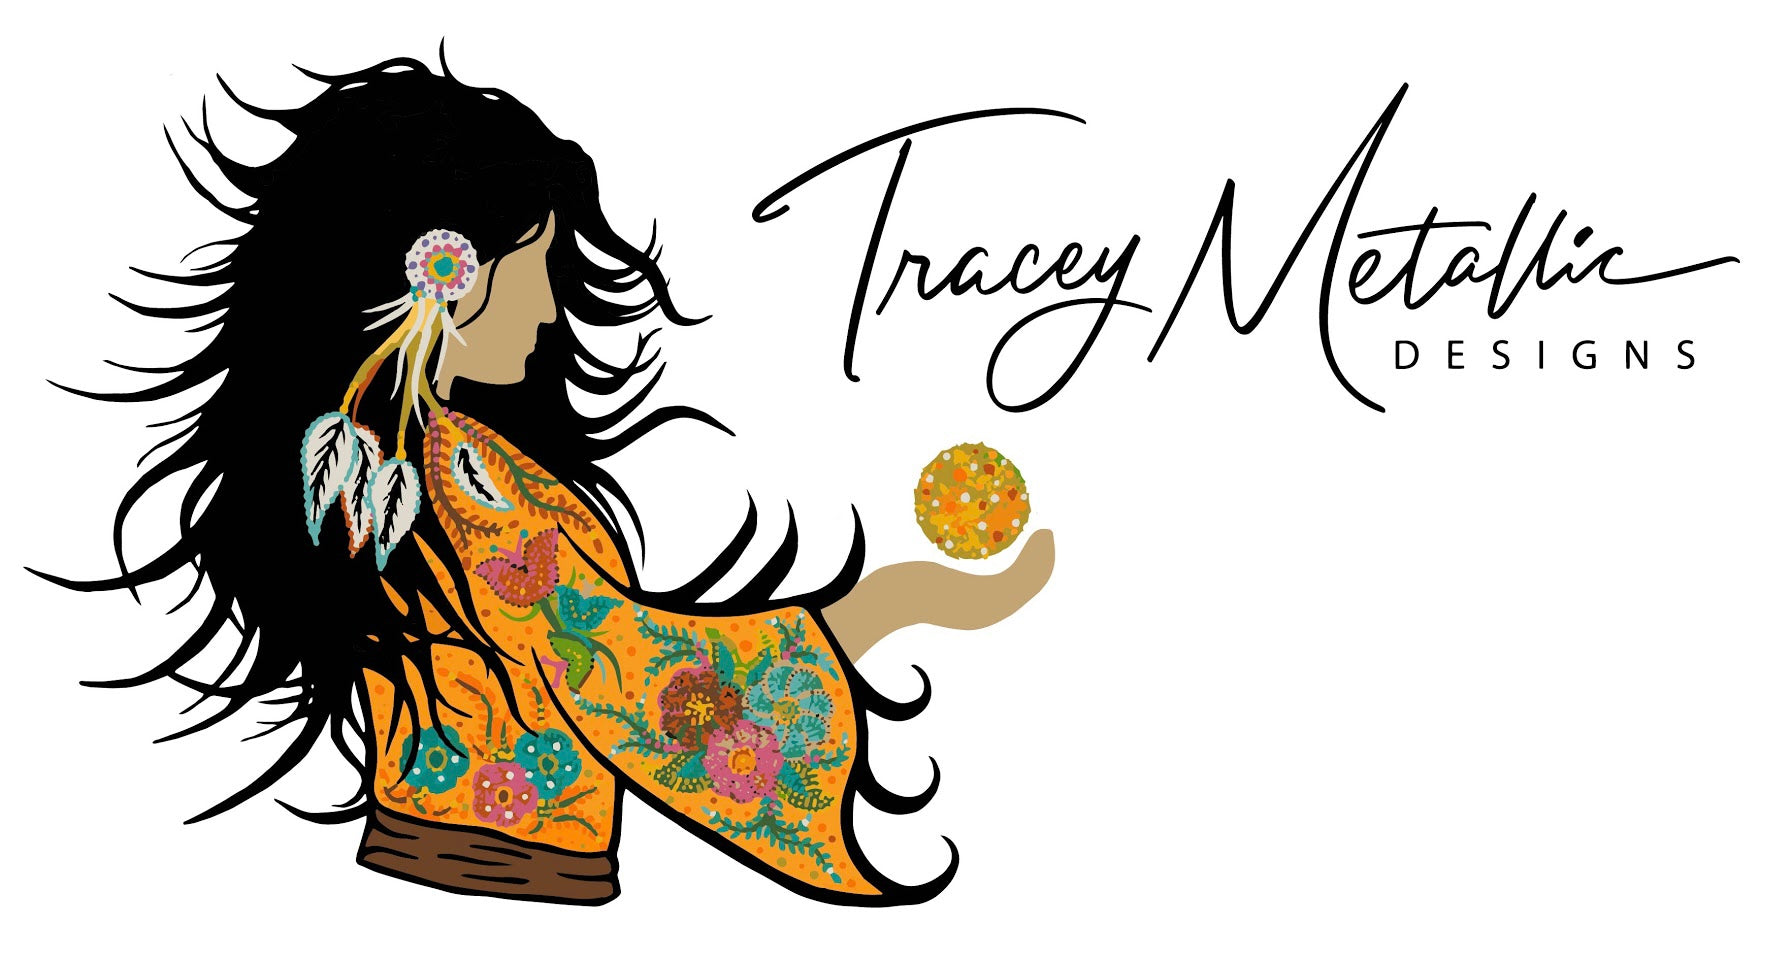 Tracey Metallic Designs